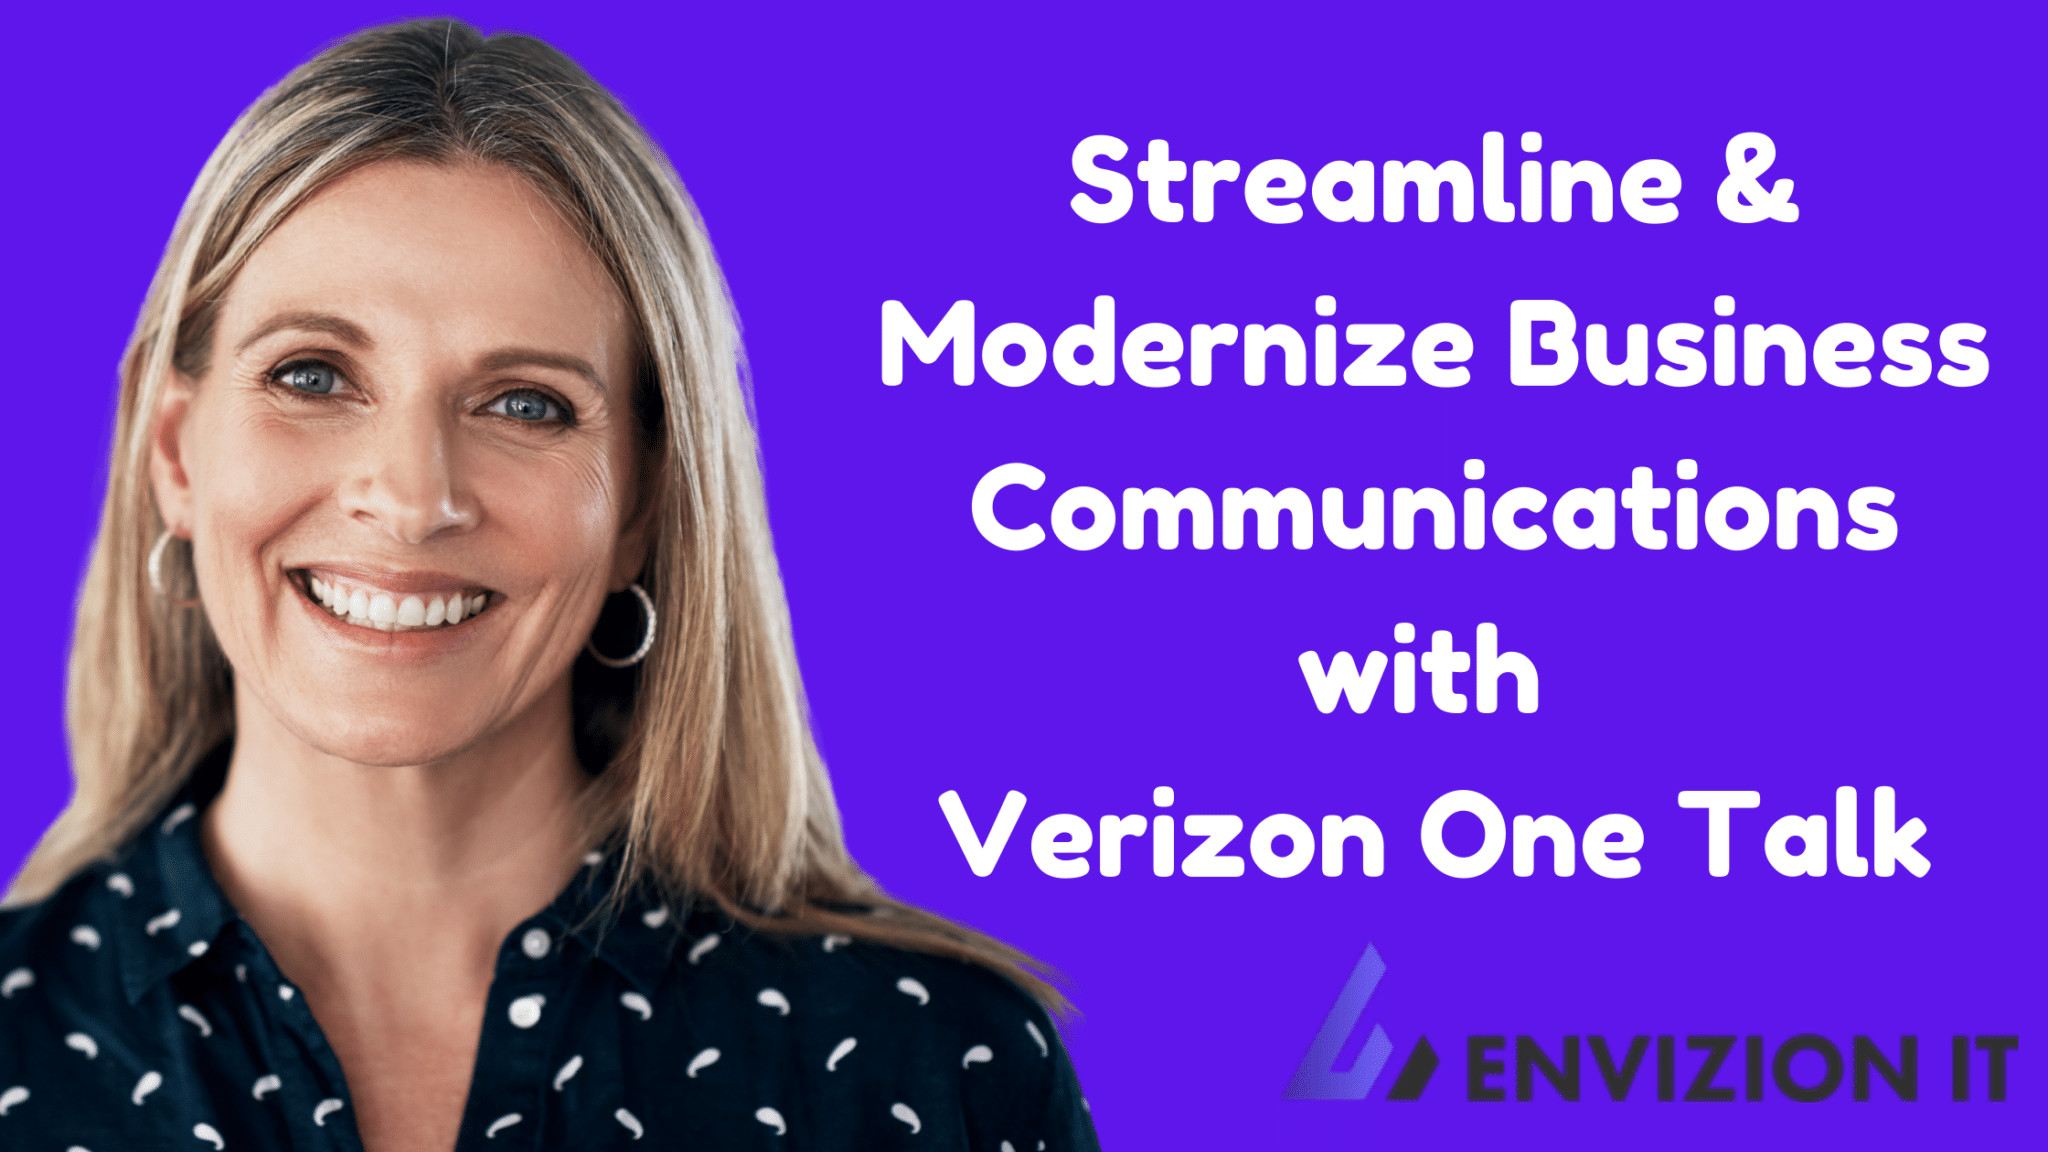 Streamline & Modernize Business Communications with Verizon One Talk